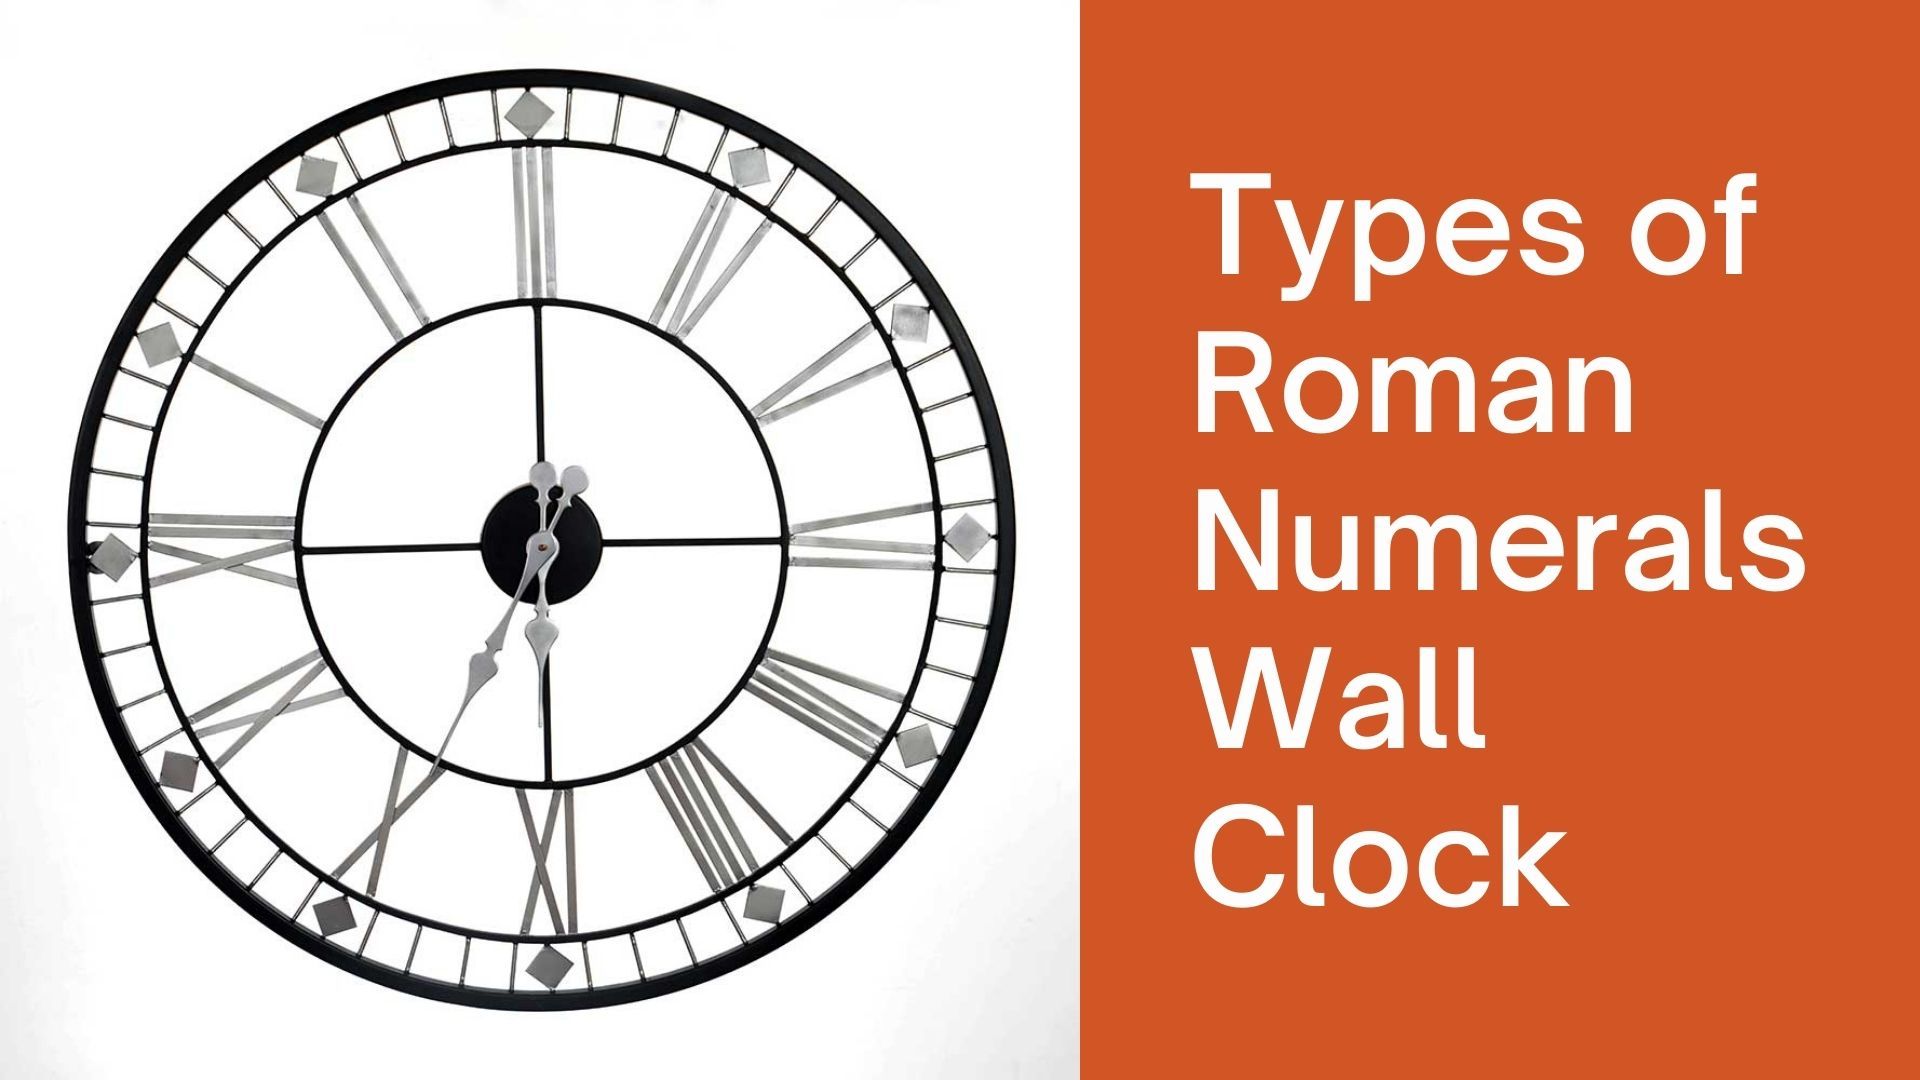 Types of Roman Numerals Wall Clock